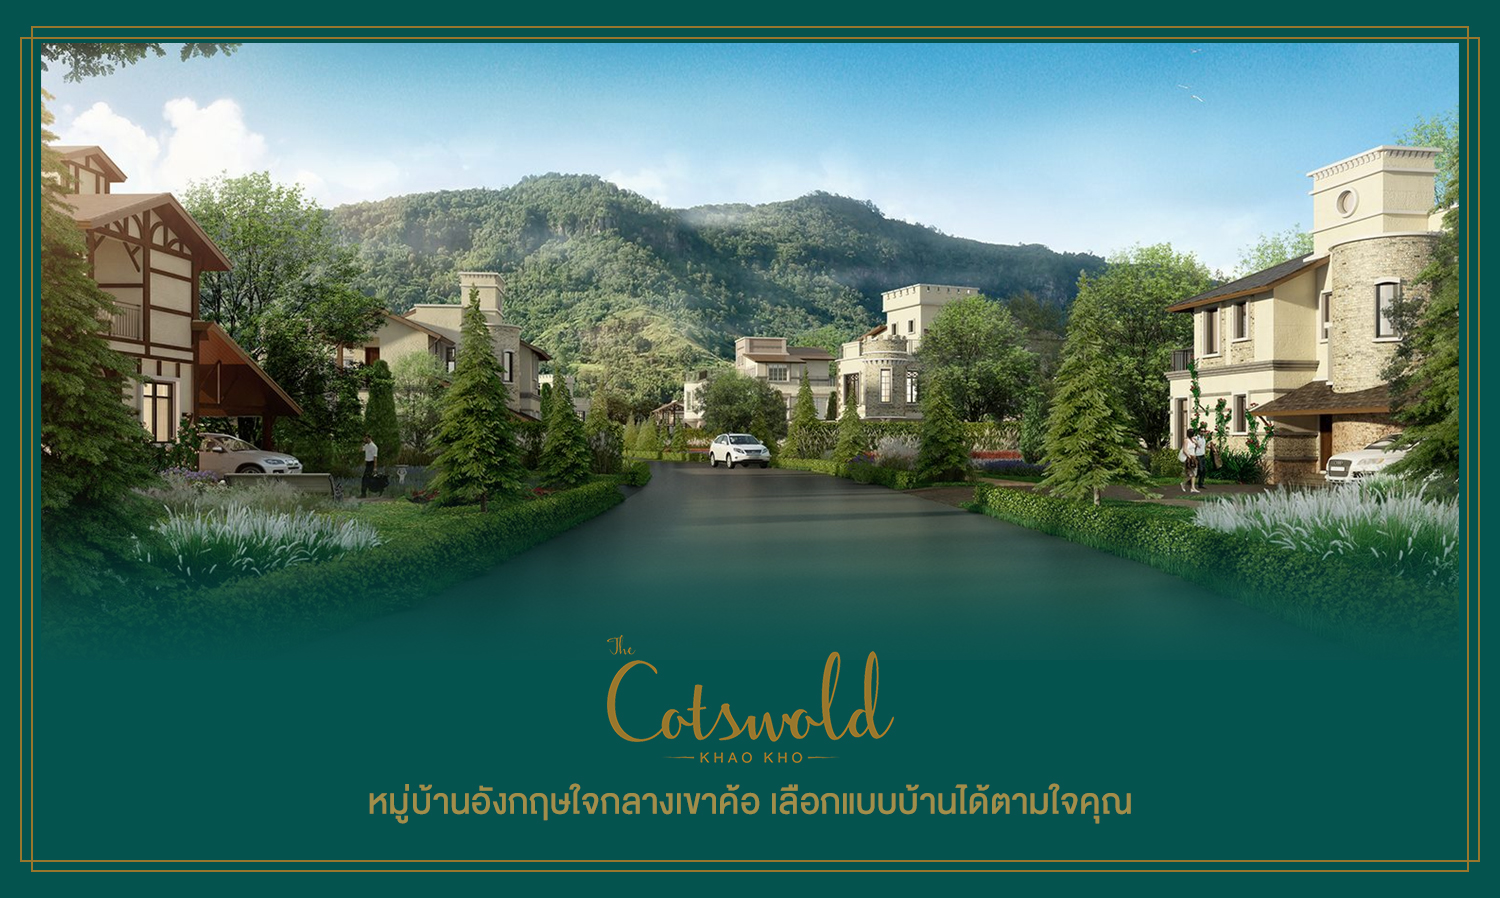 “the-cotswold-khao-kho”-หมู่บ้านอังกฤษใจกลางเขาค้อ-เลือกแบบบ้านได้ตามใจคุณ